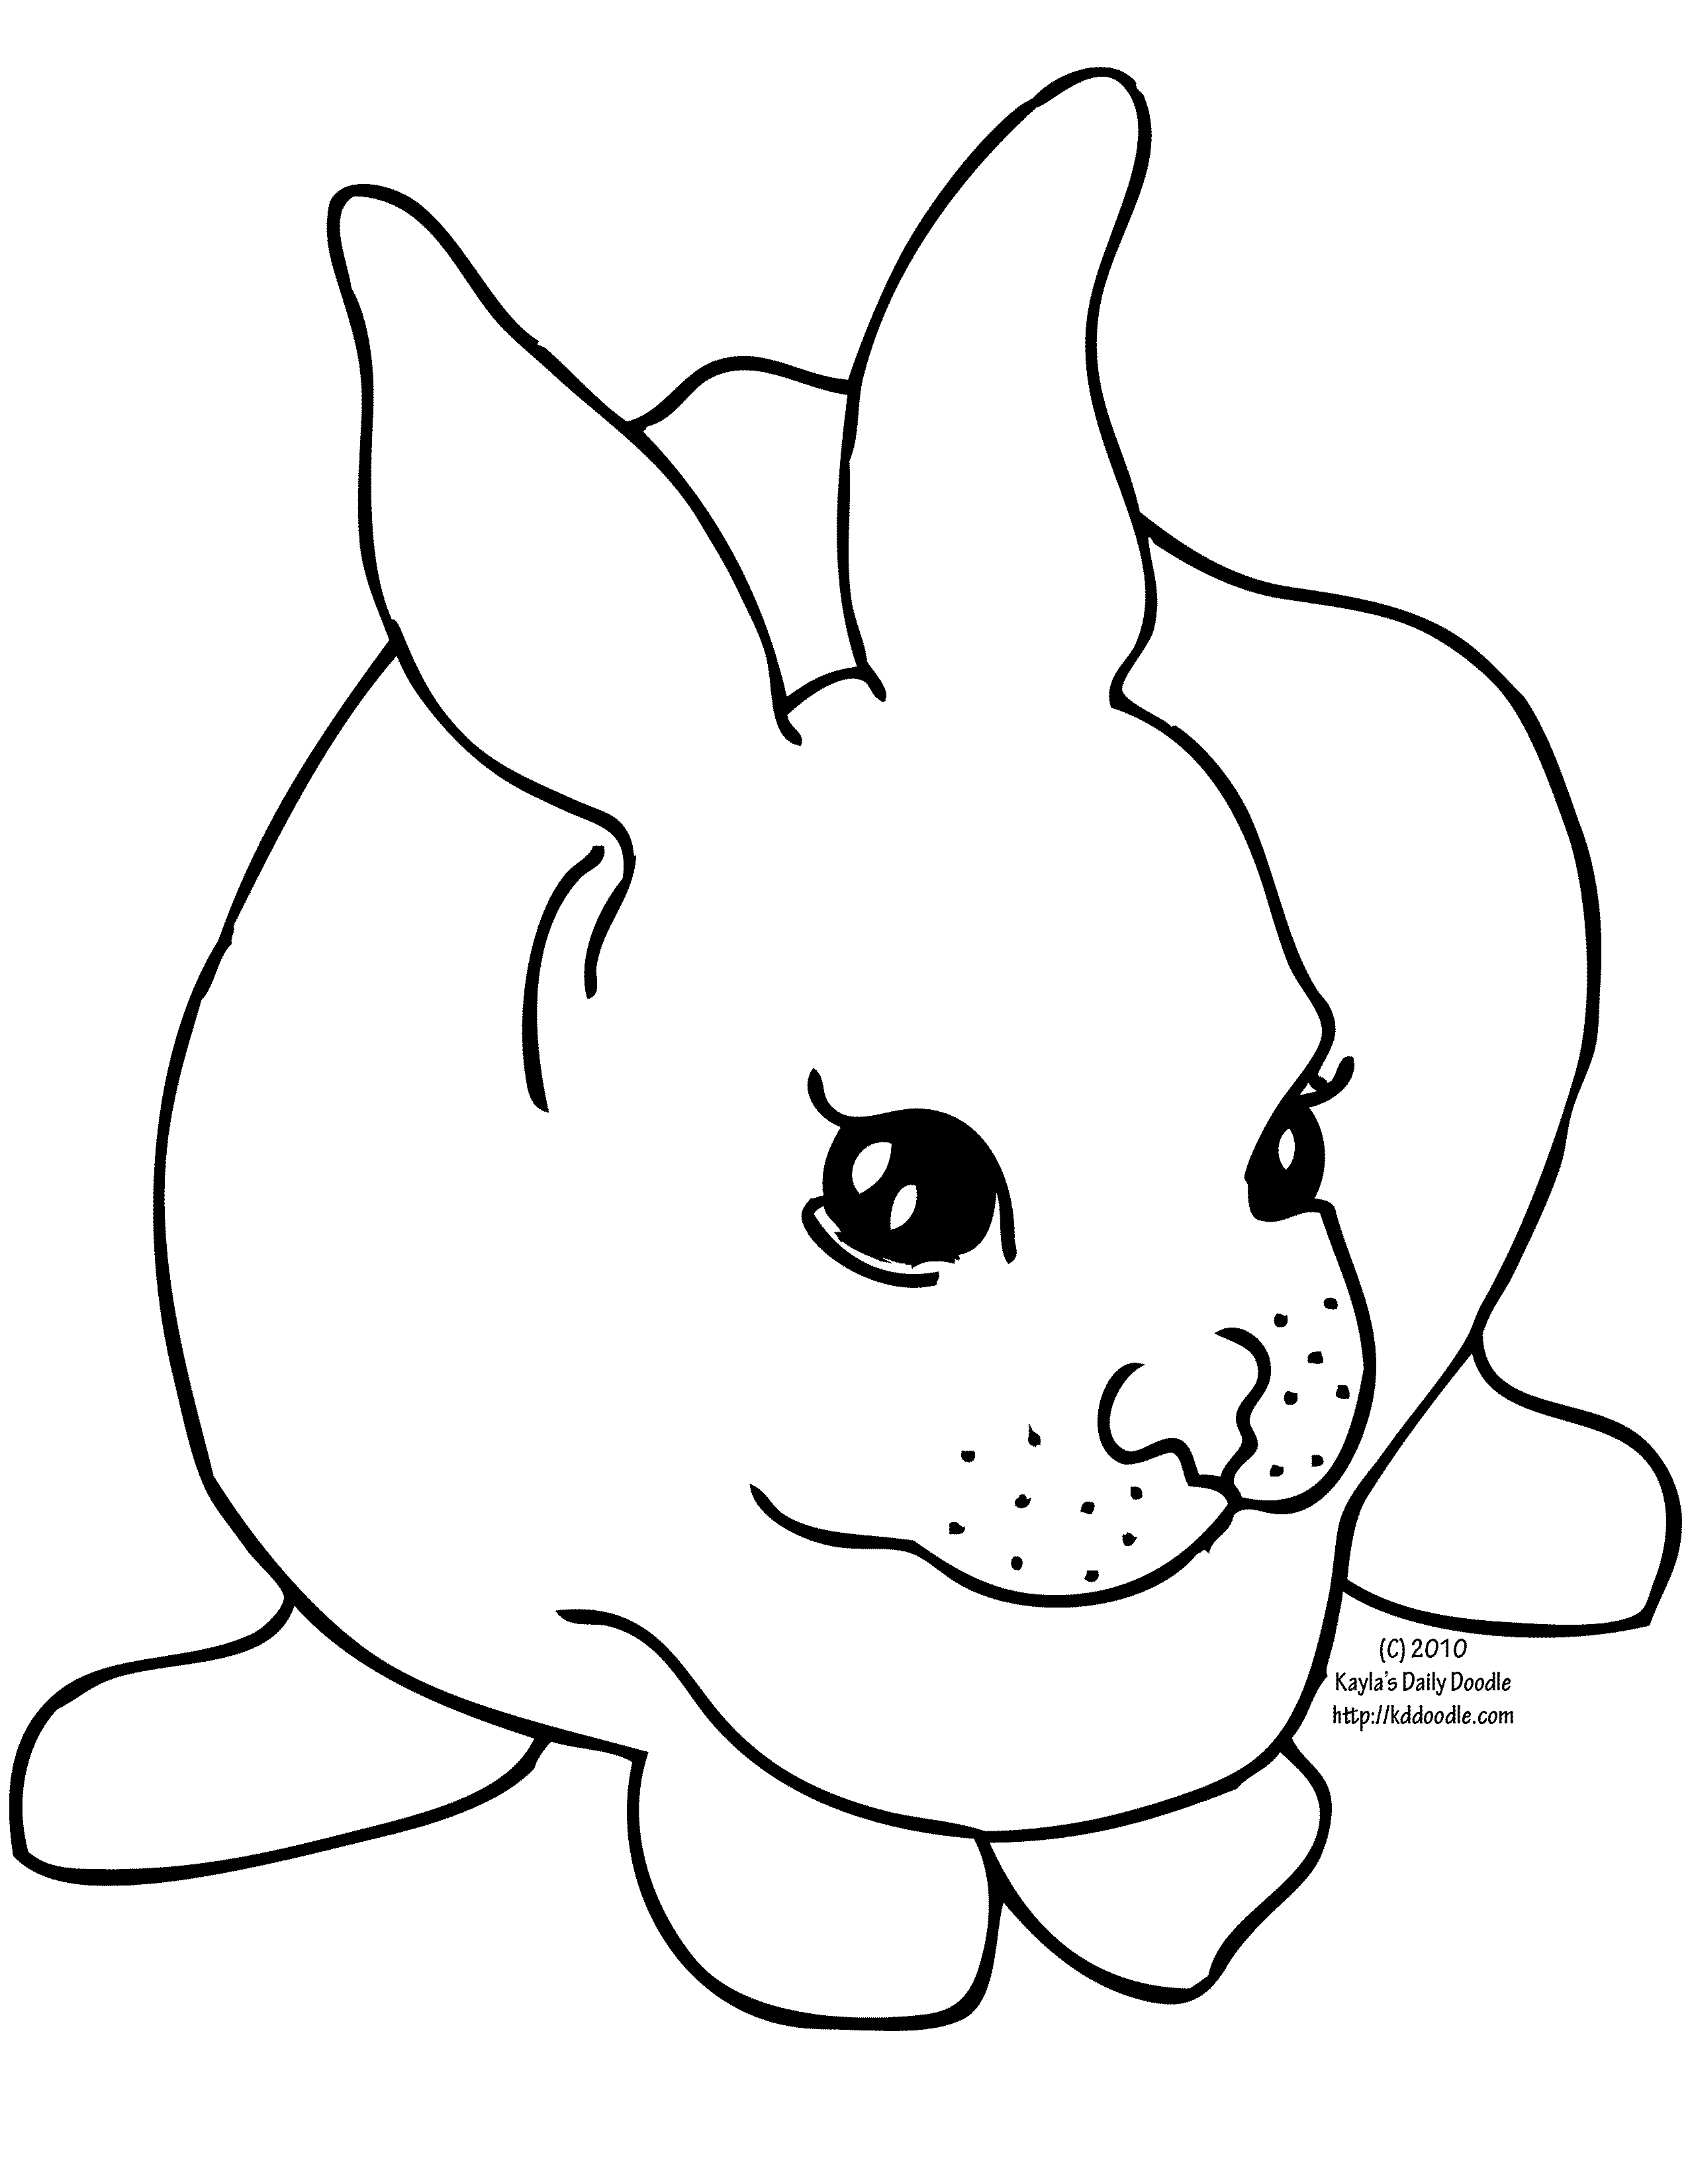 Free Rabbit Line Art Download Free Rabbit Line Art png images Free